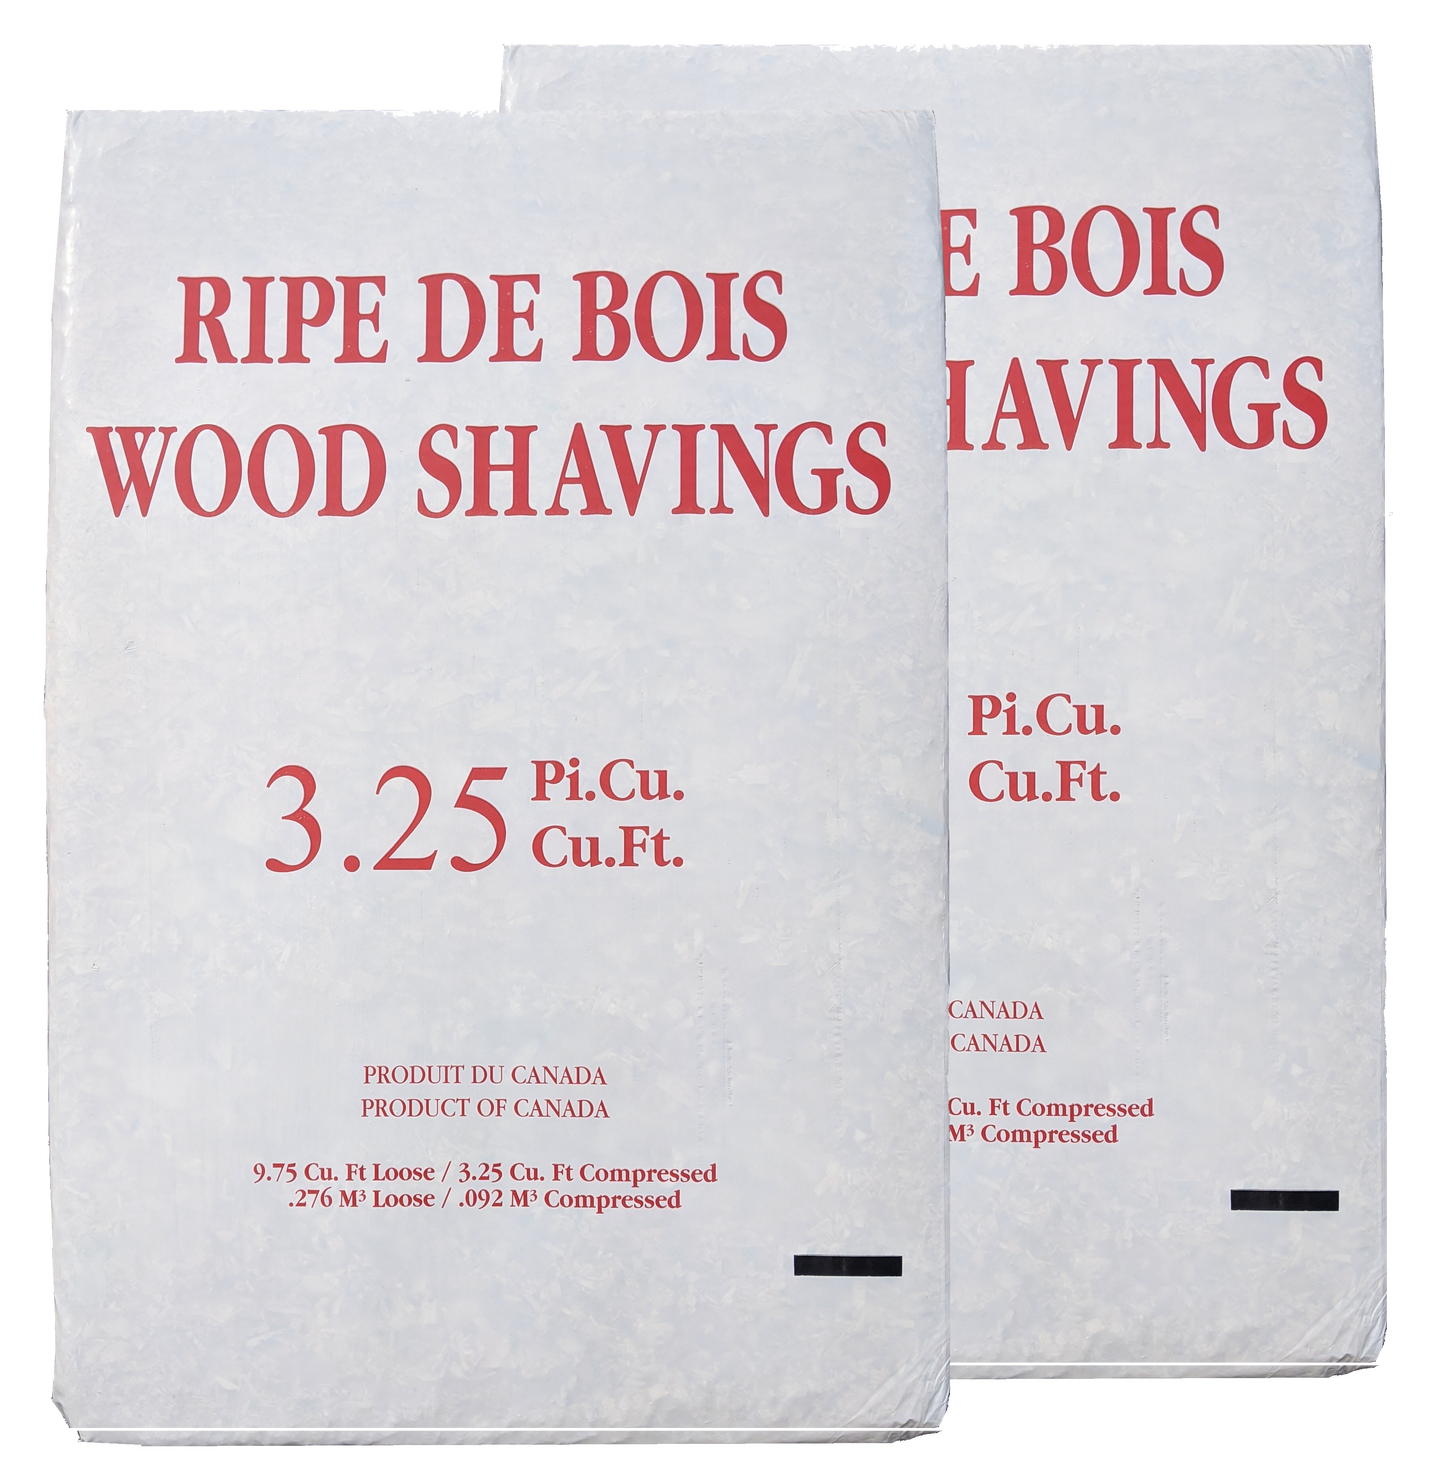 6.50 cu. ft. - Wood Shavings